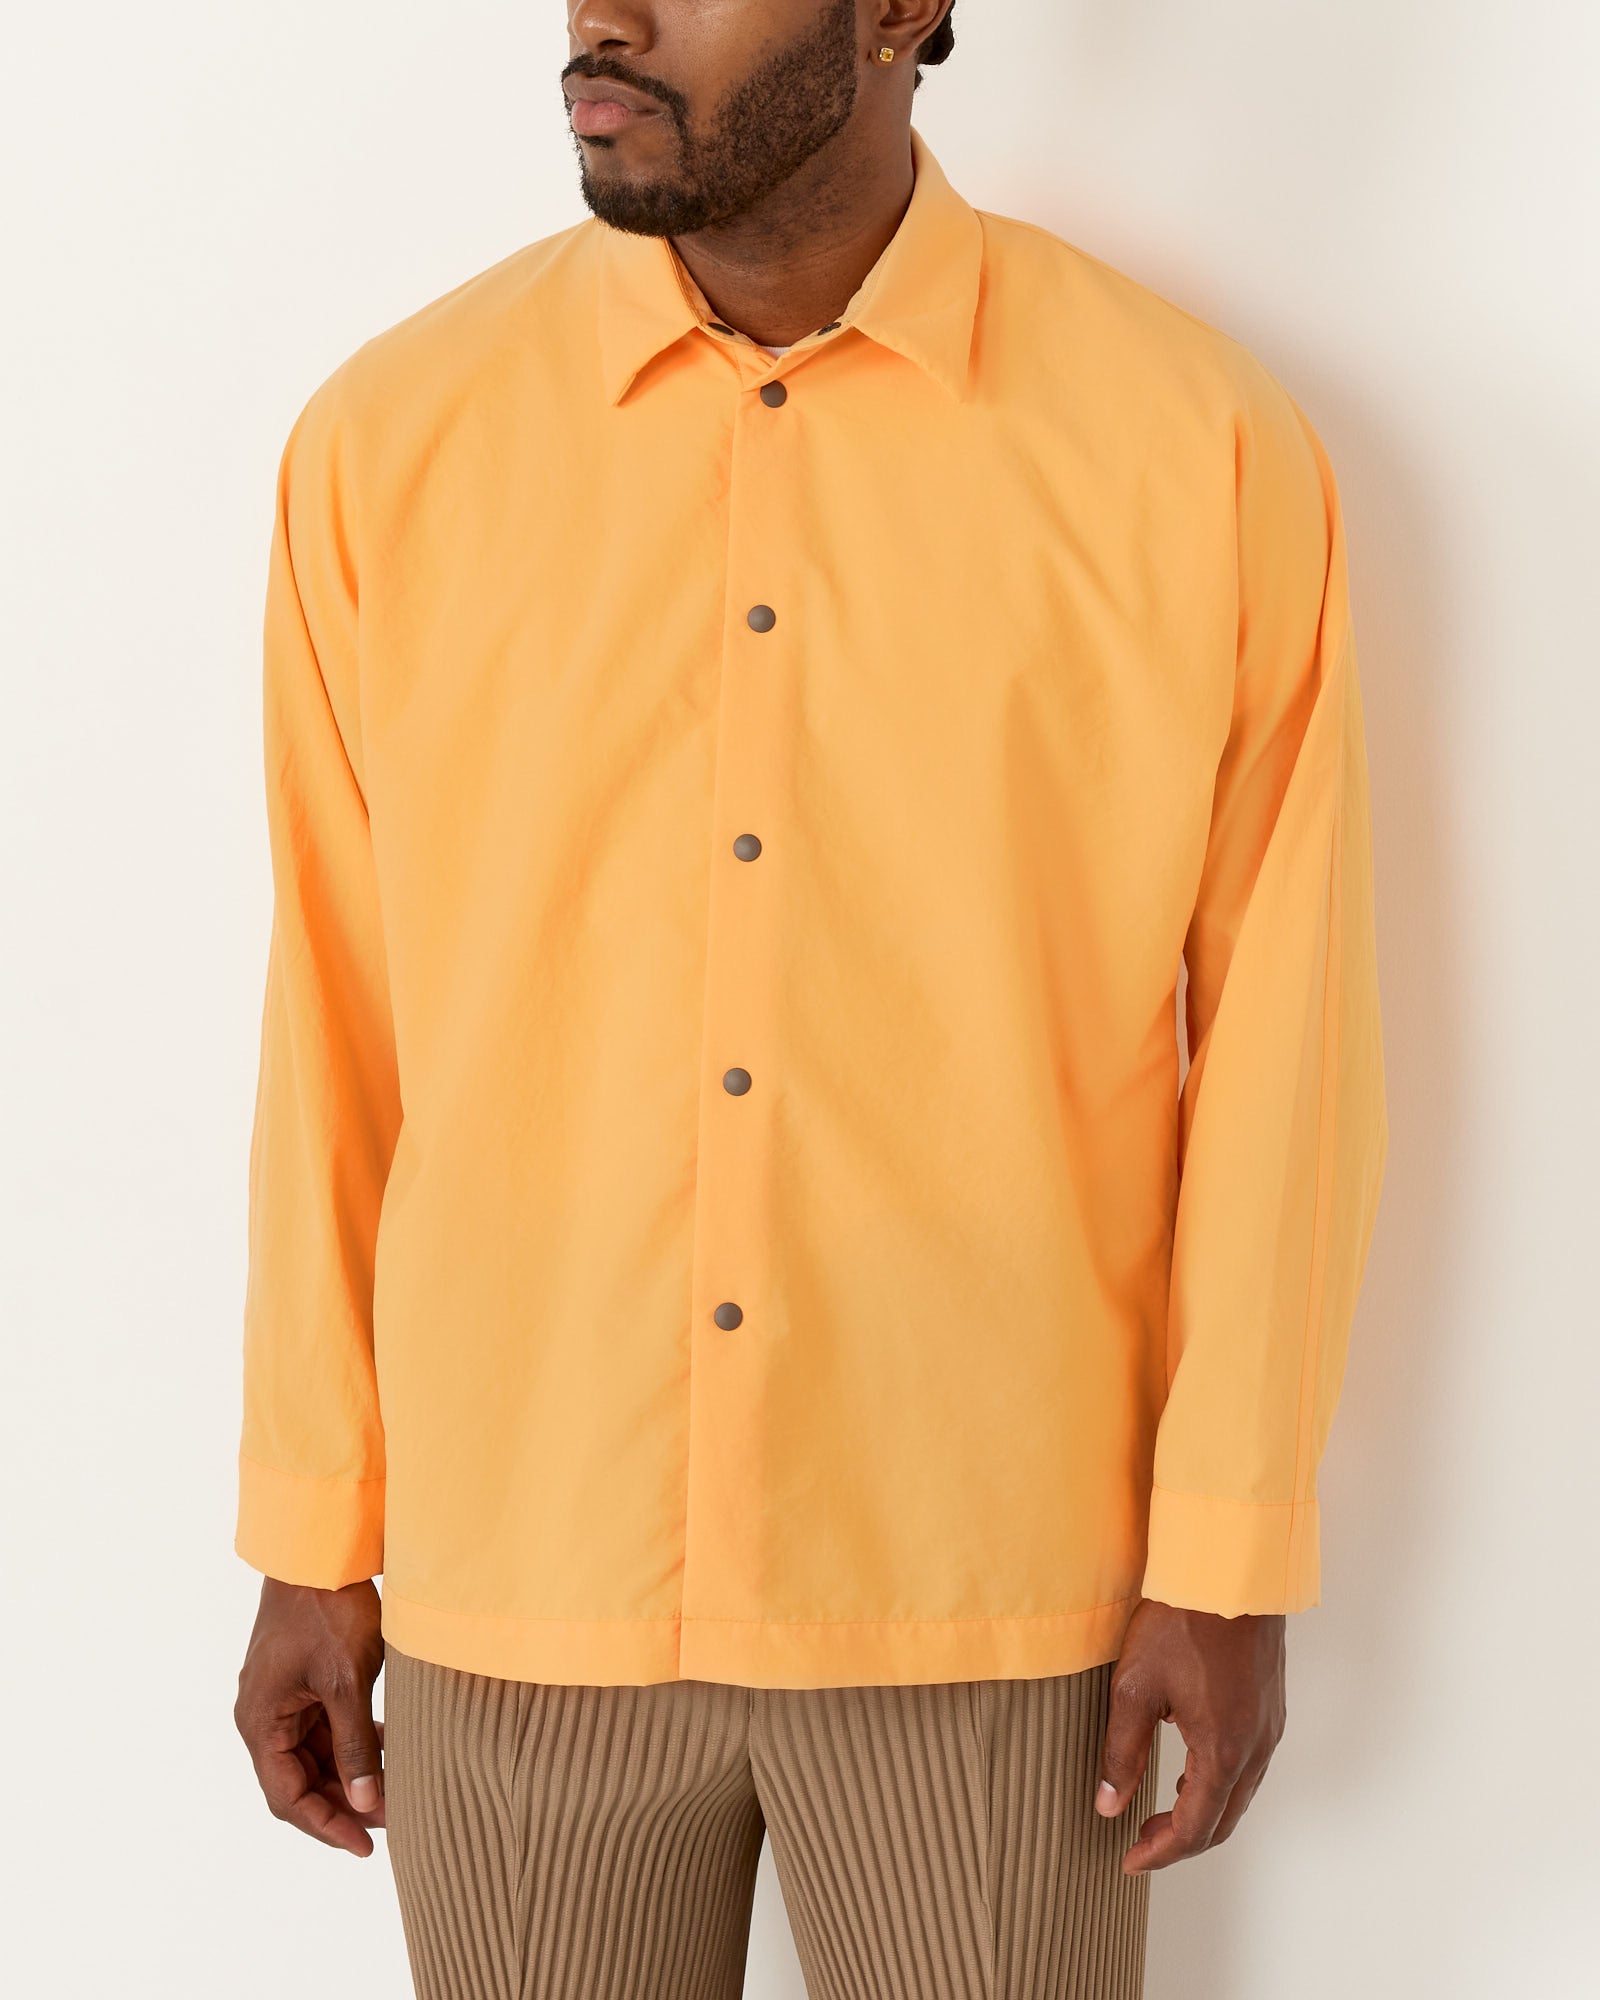 Verso Shirt in Orange